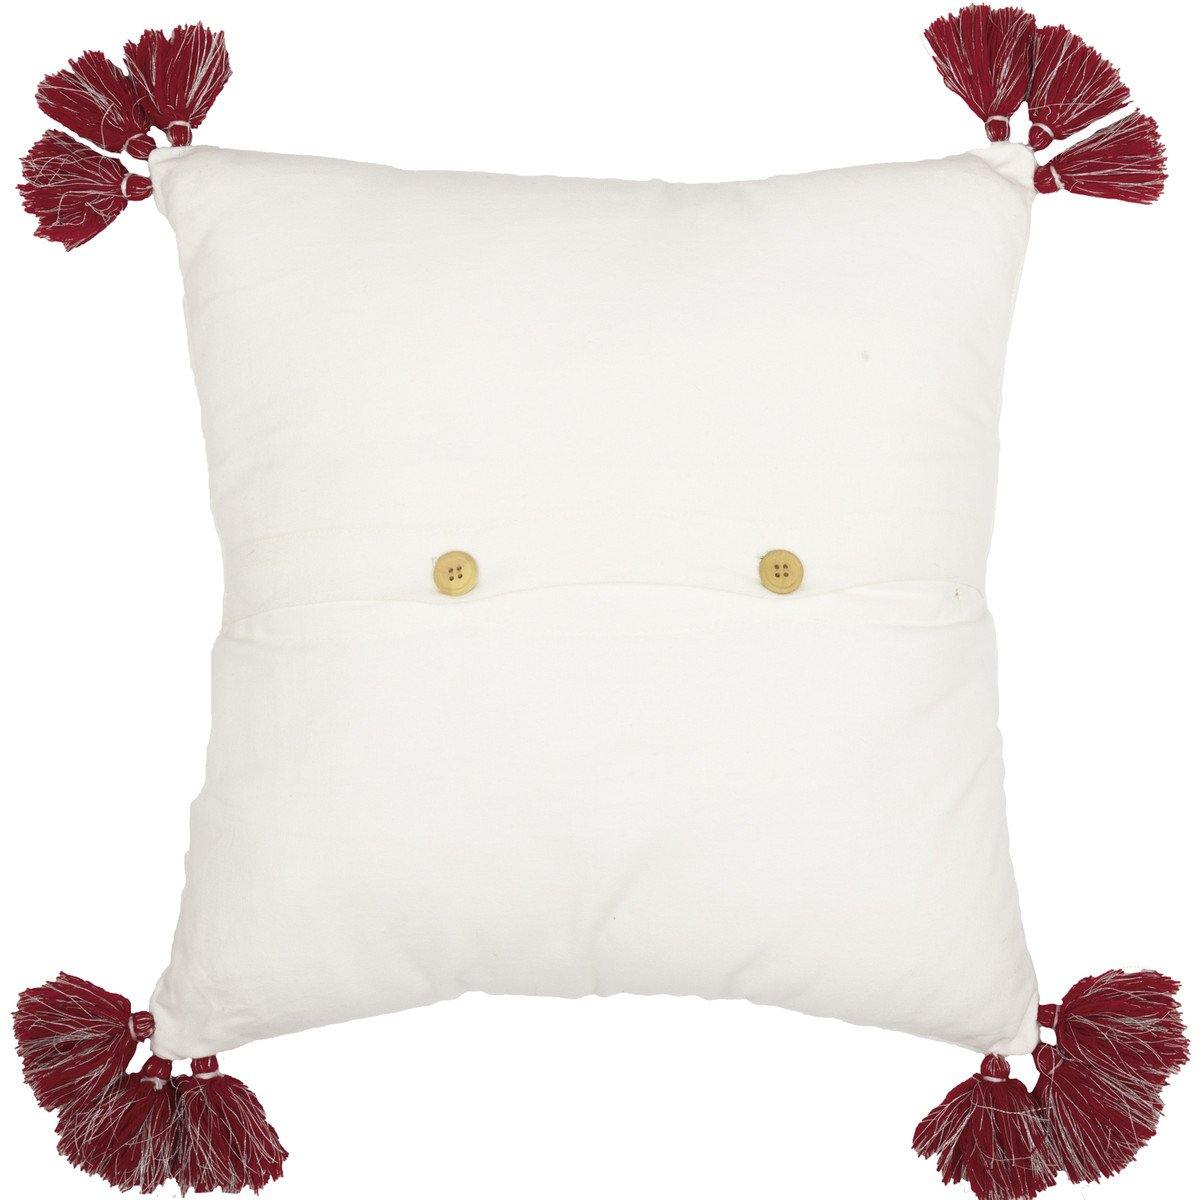 Wreath Pom Pom Pillow 18"x18" - The Fox Decor